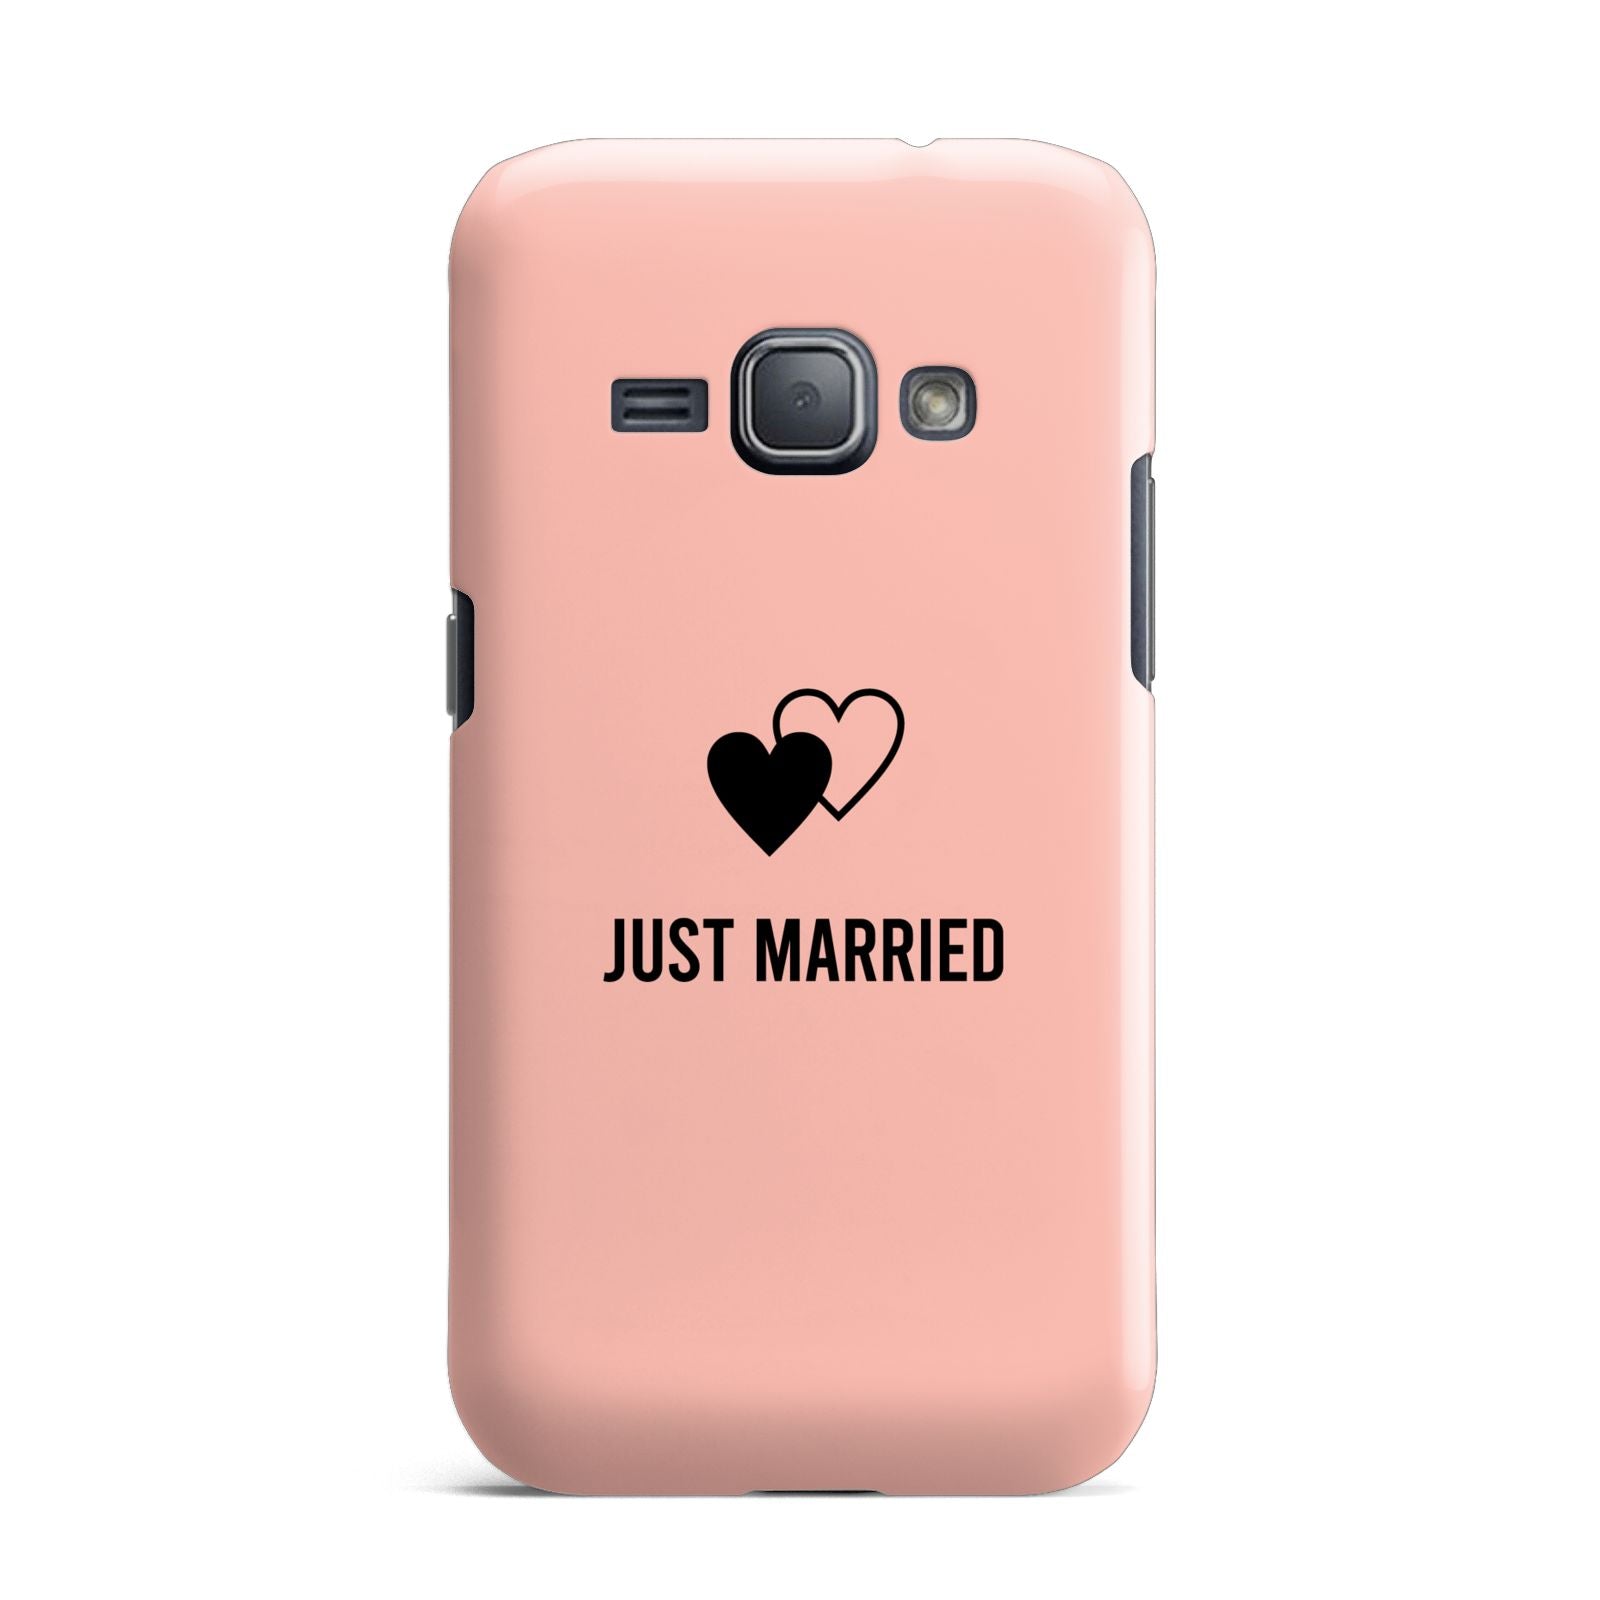 Just Married Samsung Galaxy J1 2016 Case